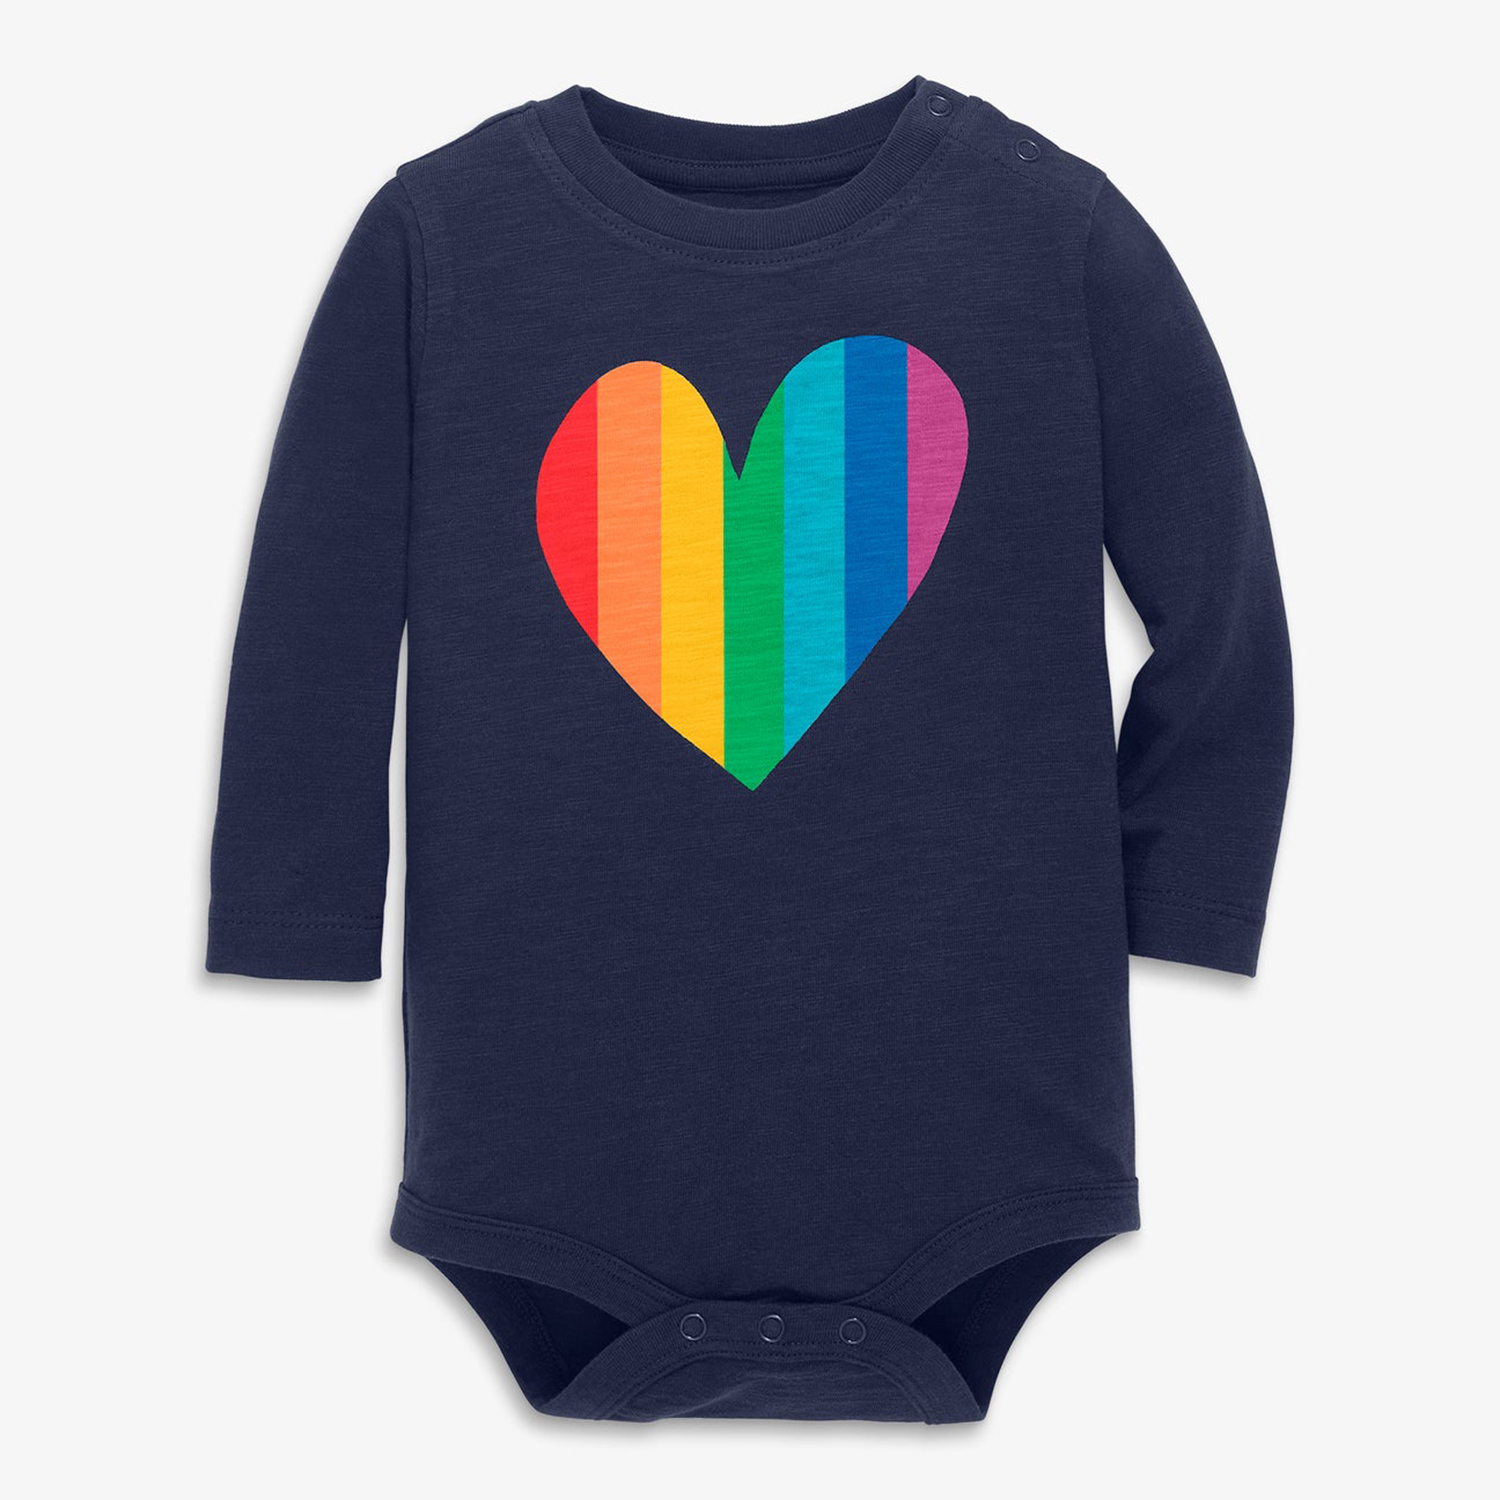 Primary Longsleeve Babysuit in Rainbow Heart